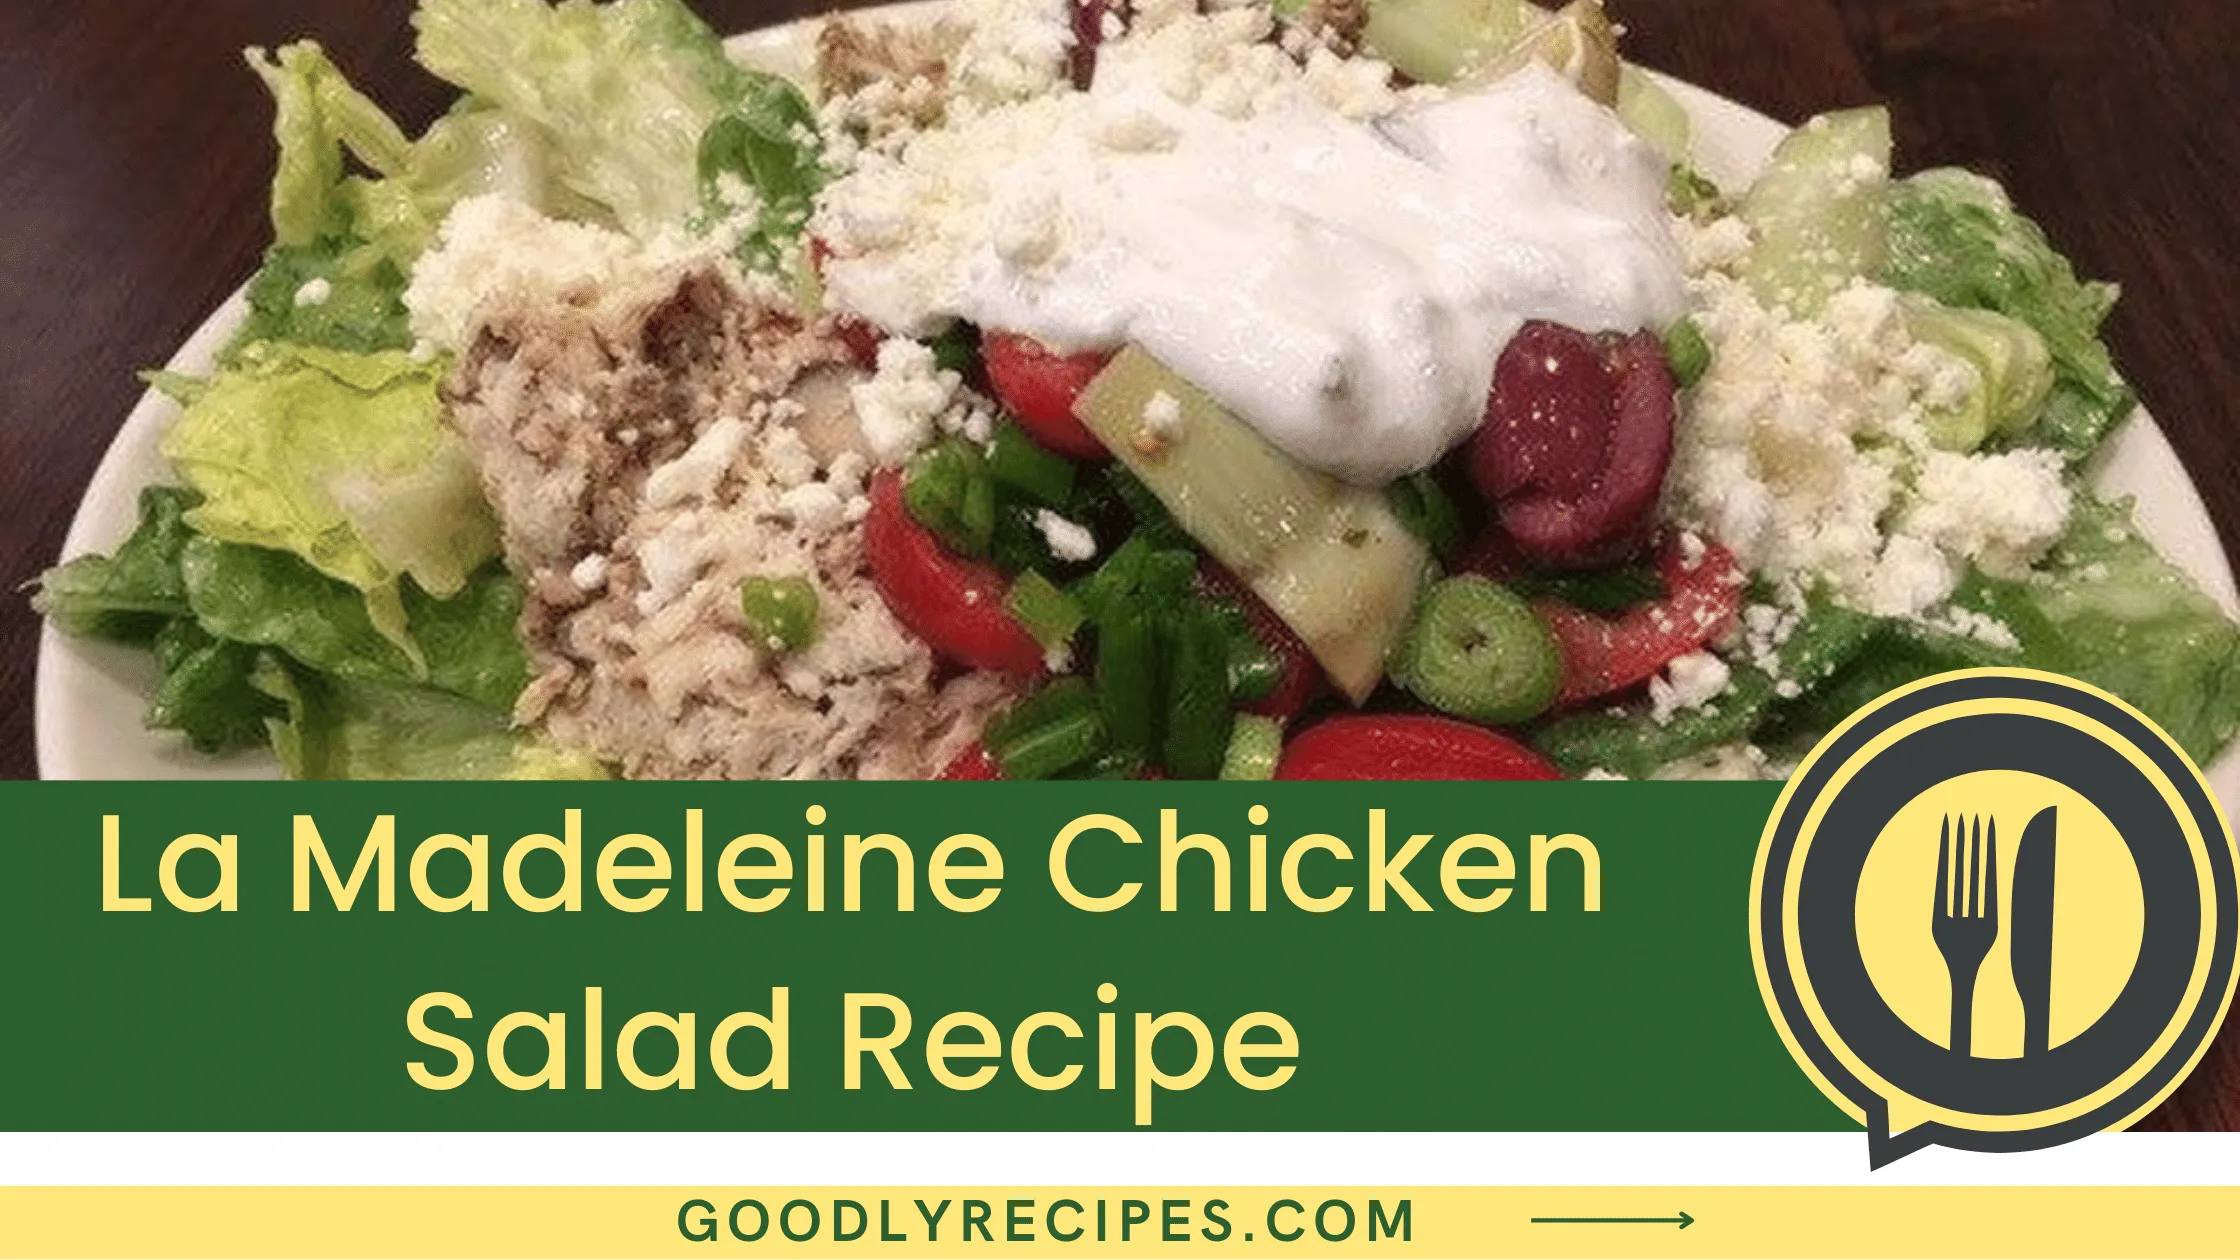 La Madeleine Chicken Salad Recipe - For Food Lovers